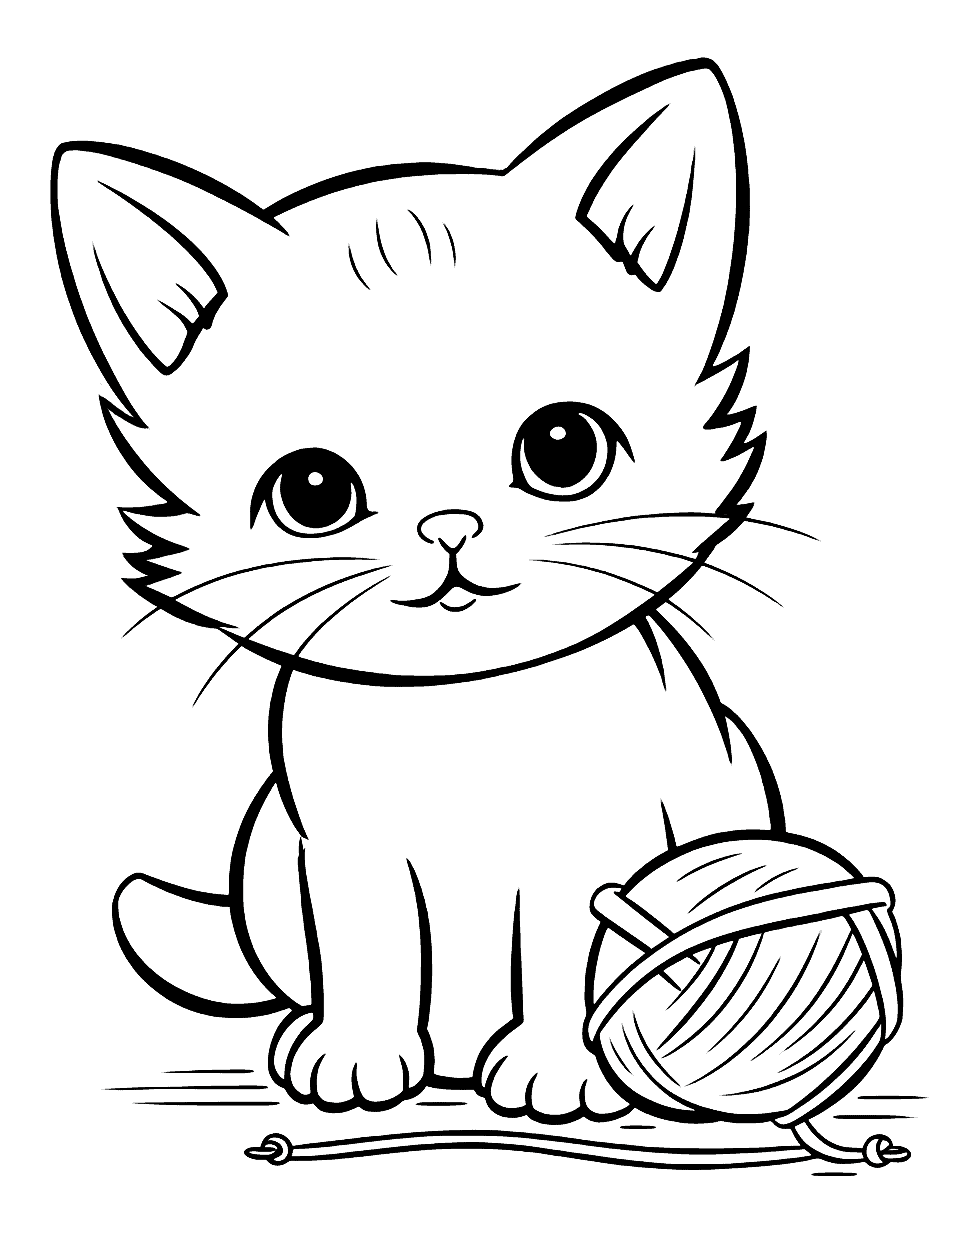 Cute Kitten Playing With Yarn Cat Coloring Page - A kawaii kitten batting a ball of yarn across a hardwood floor.